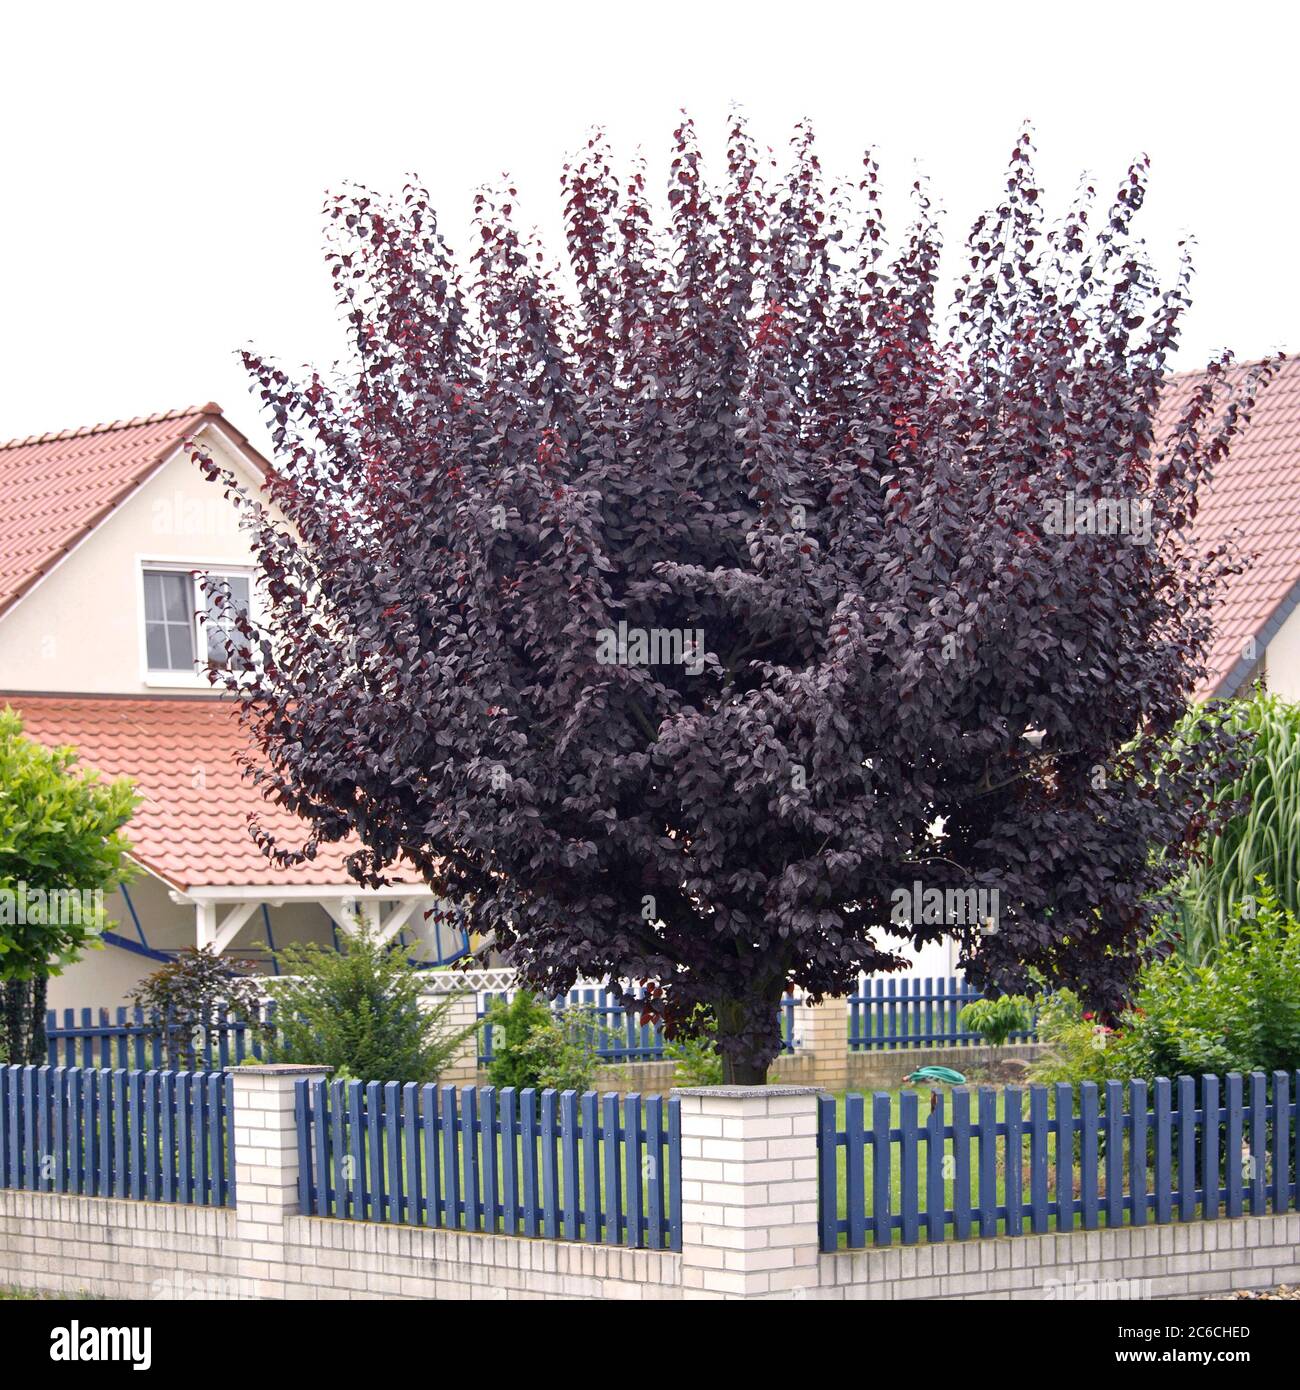 Blut-Pflaume, Prunus cerasifera Nigra, Blood plum, Prunus cerasifera Nigra Stock Photo